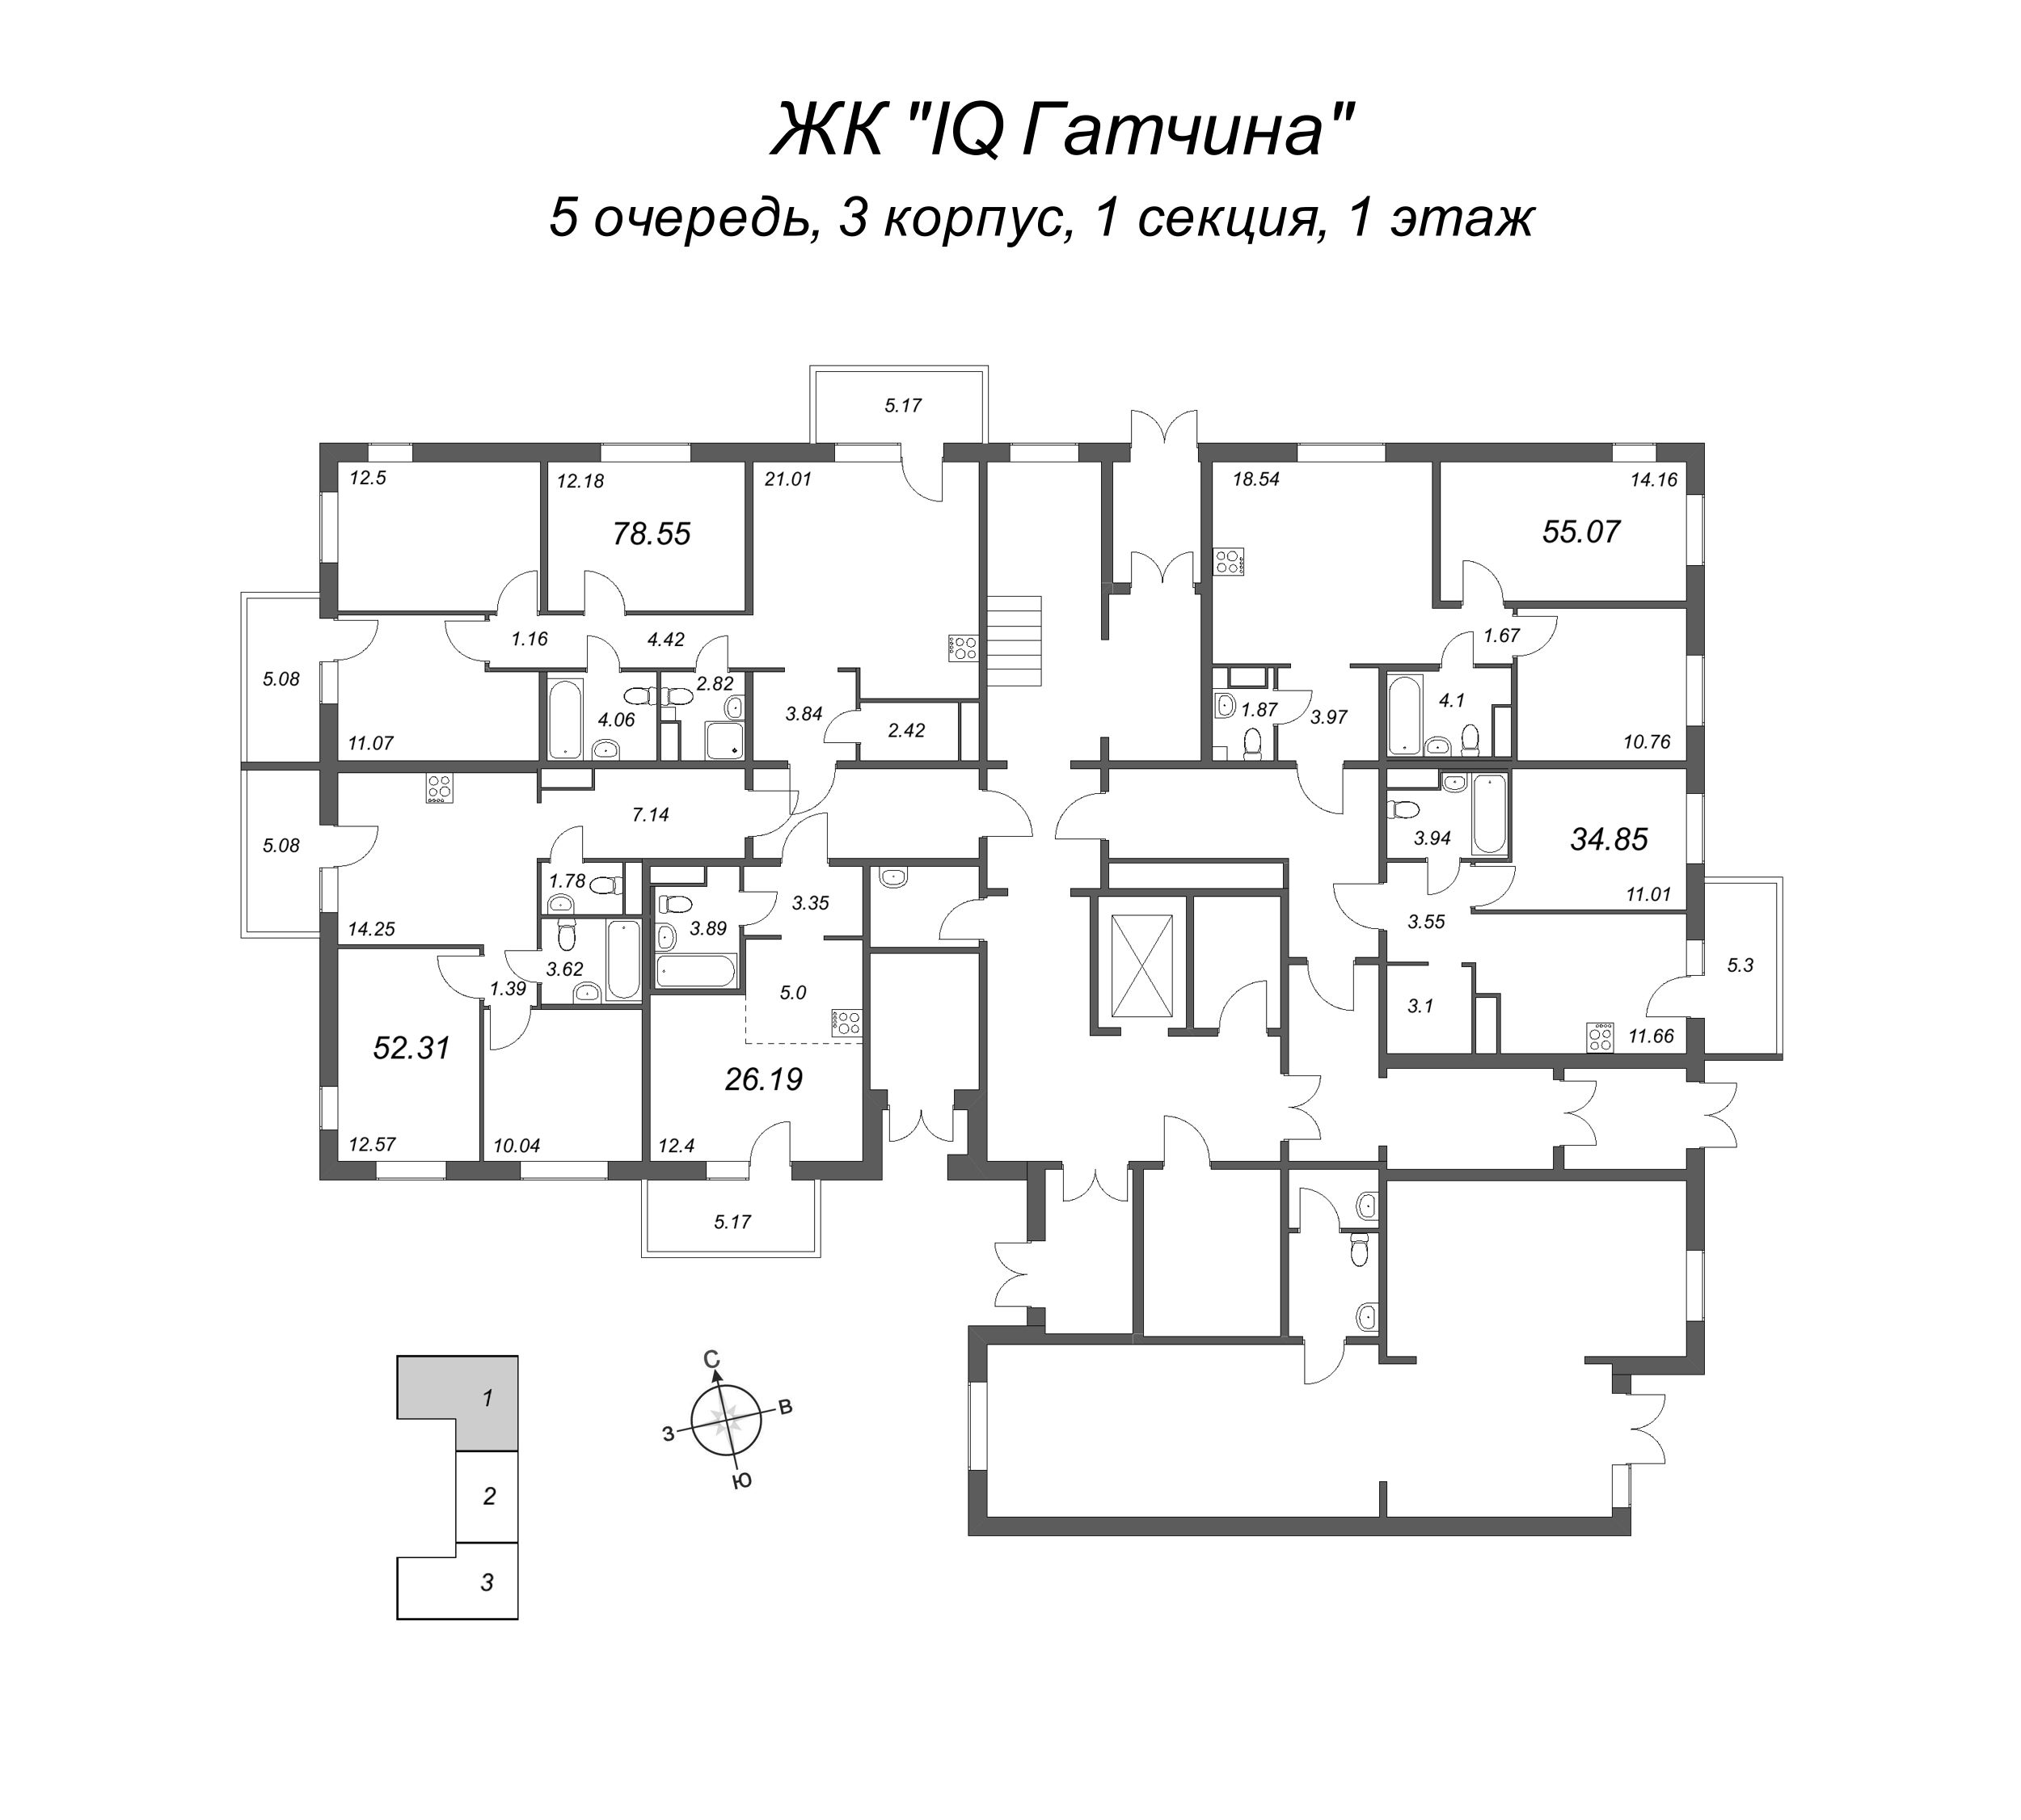 4-комнатная (Евро) квартира, 78.75 м² - планировка этажа